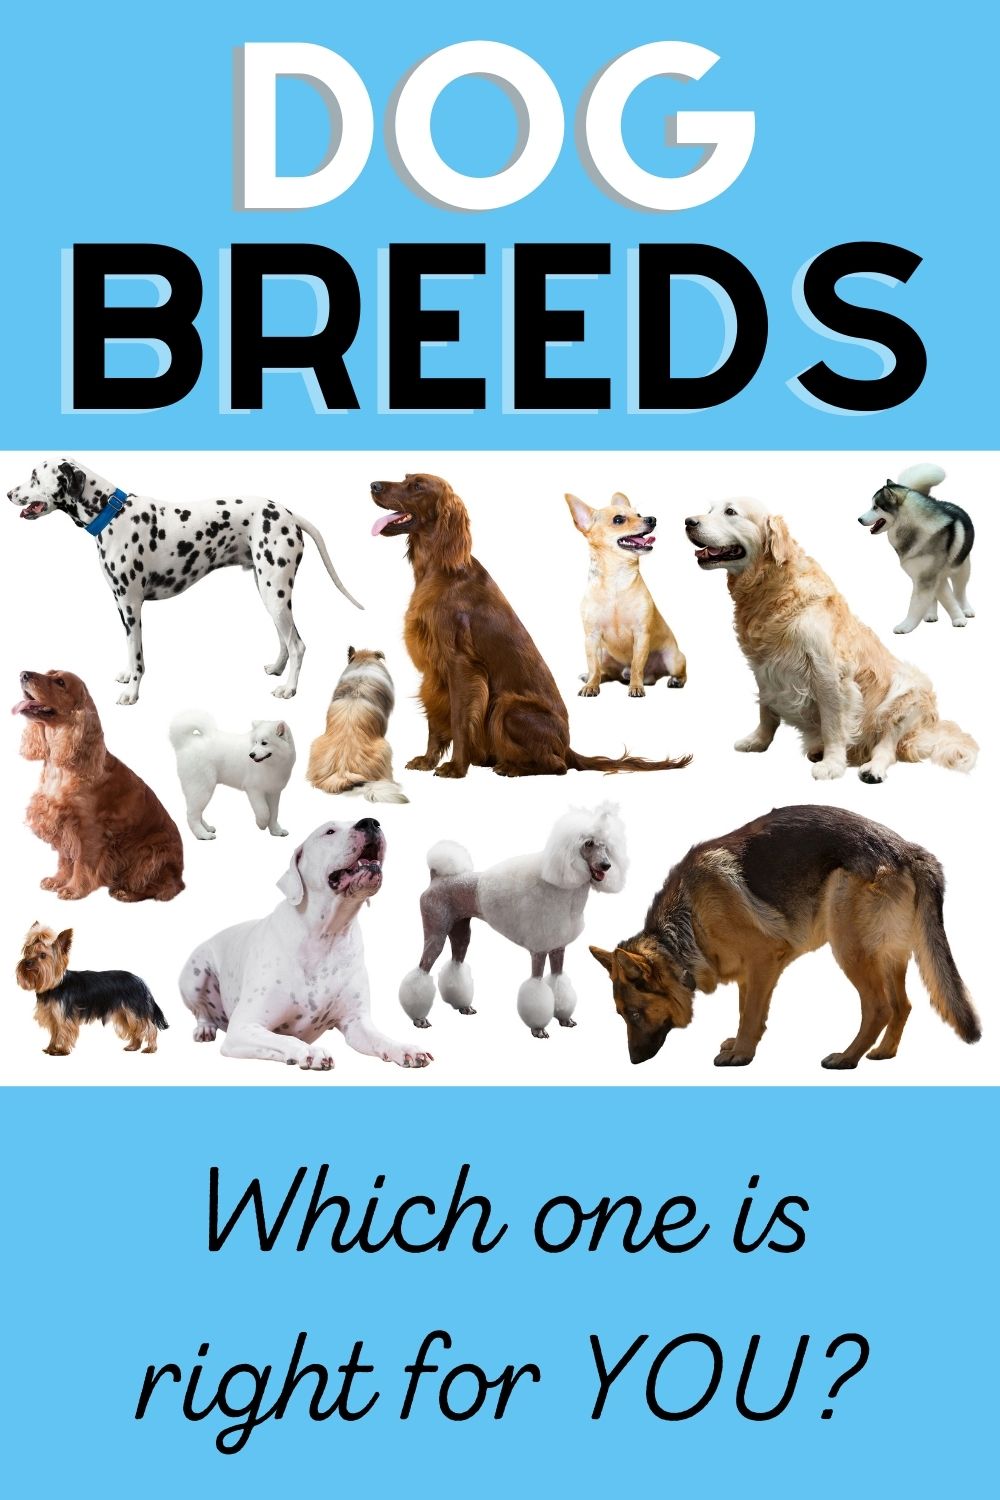 https://www.dogtipper.com/wp-content/uploads/2021/11/DOG-breeds.jpg